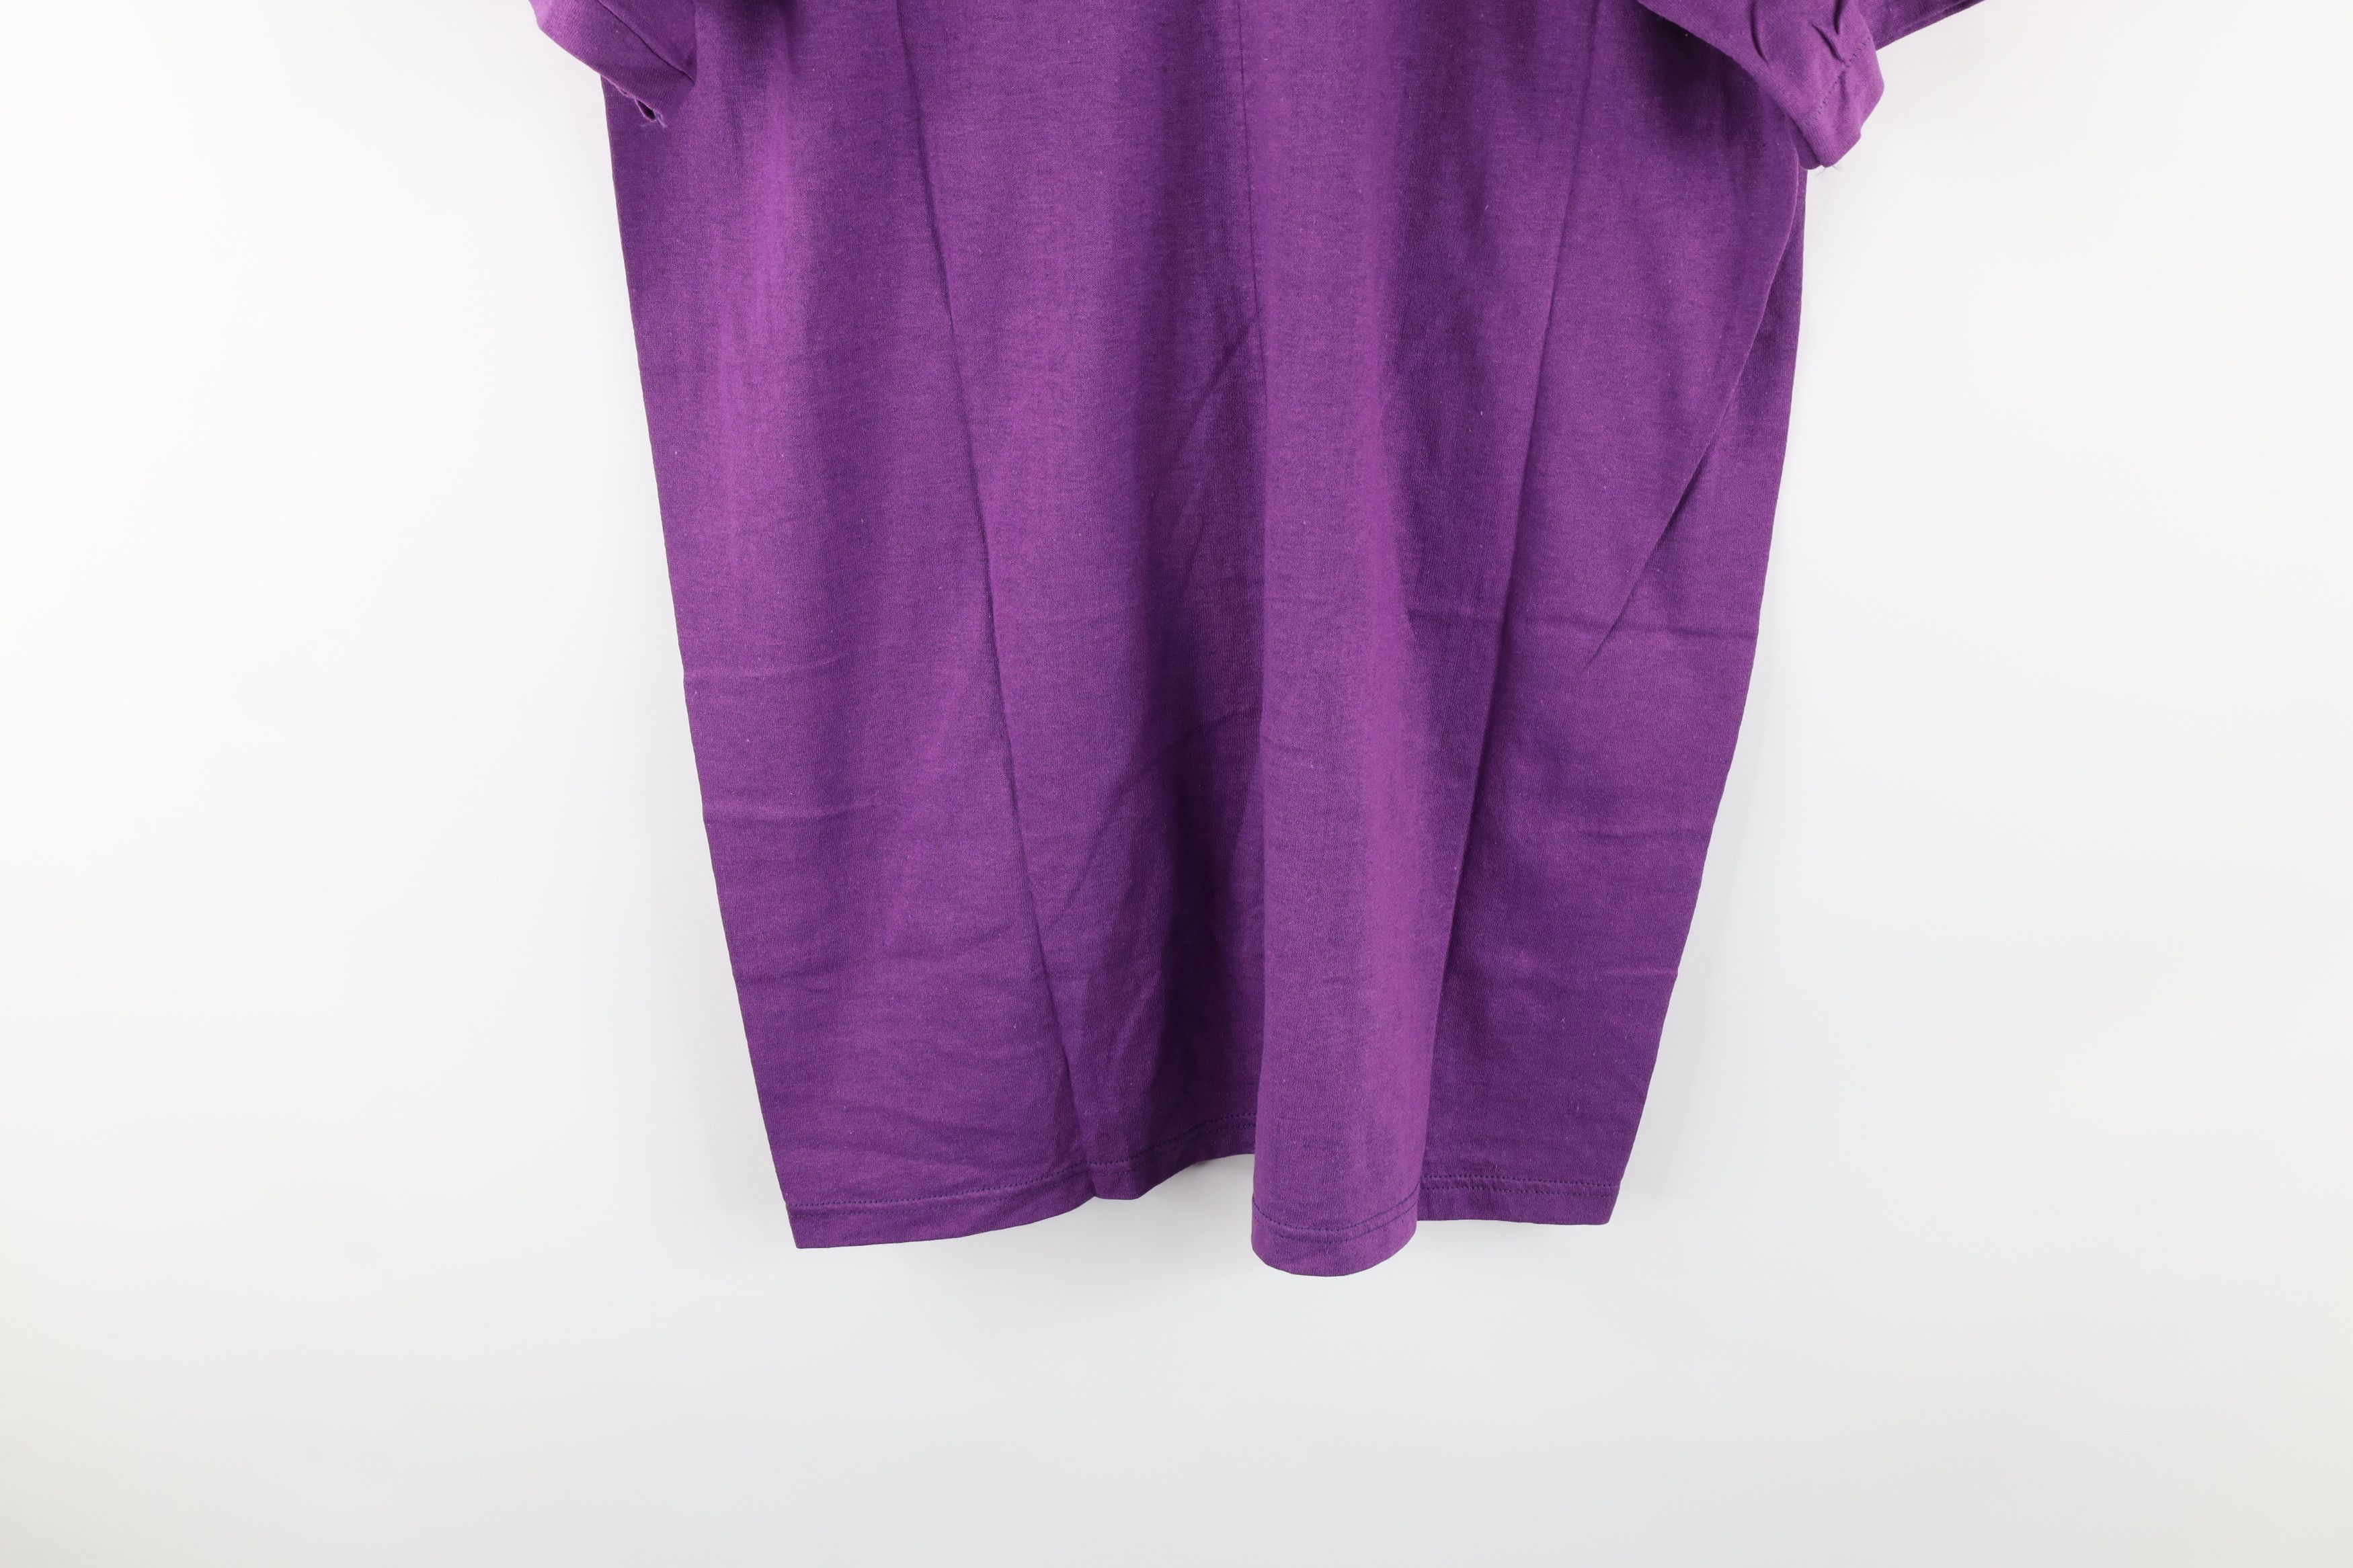 Vintage Vintage 80s Streetwear Short Sleeve Pocket T-Shirt Purple Size US L / EU 52-54 / 3 - 7 Preview